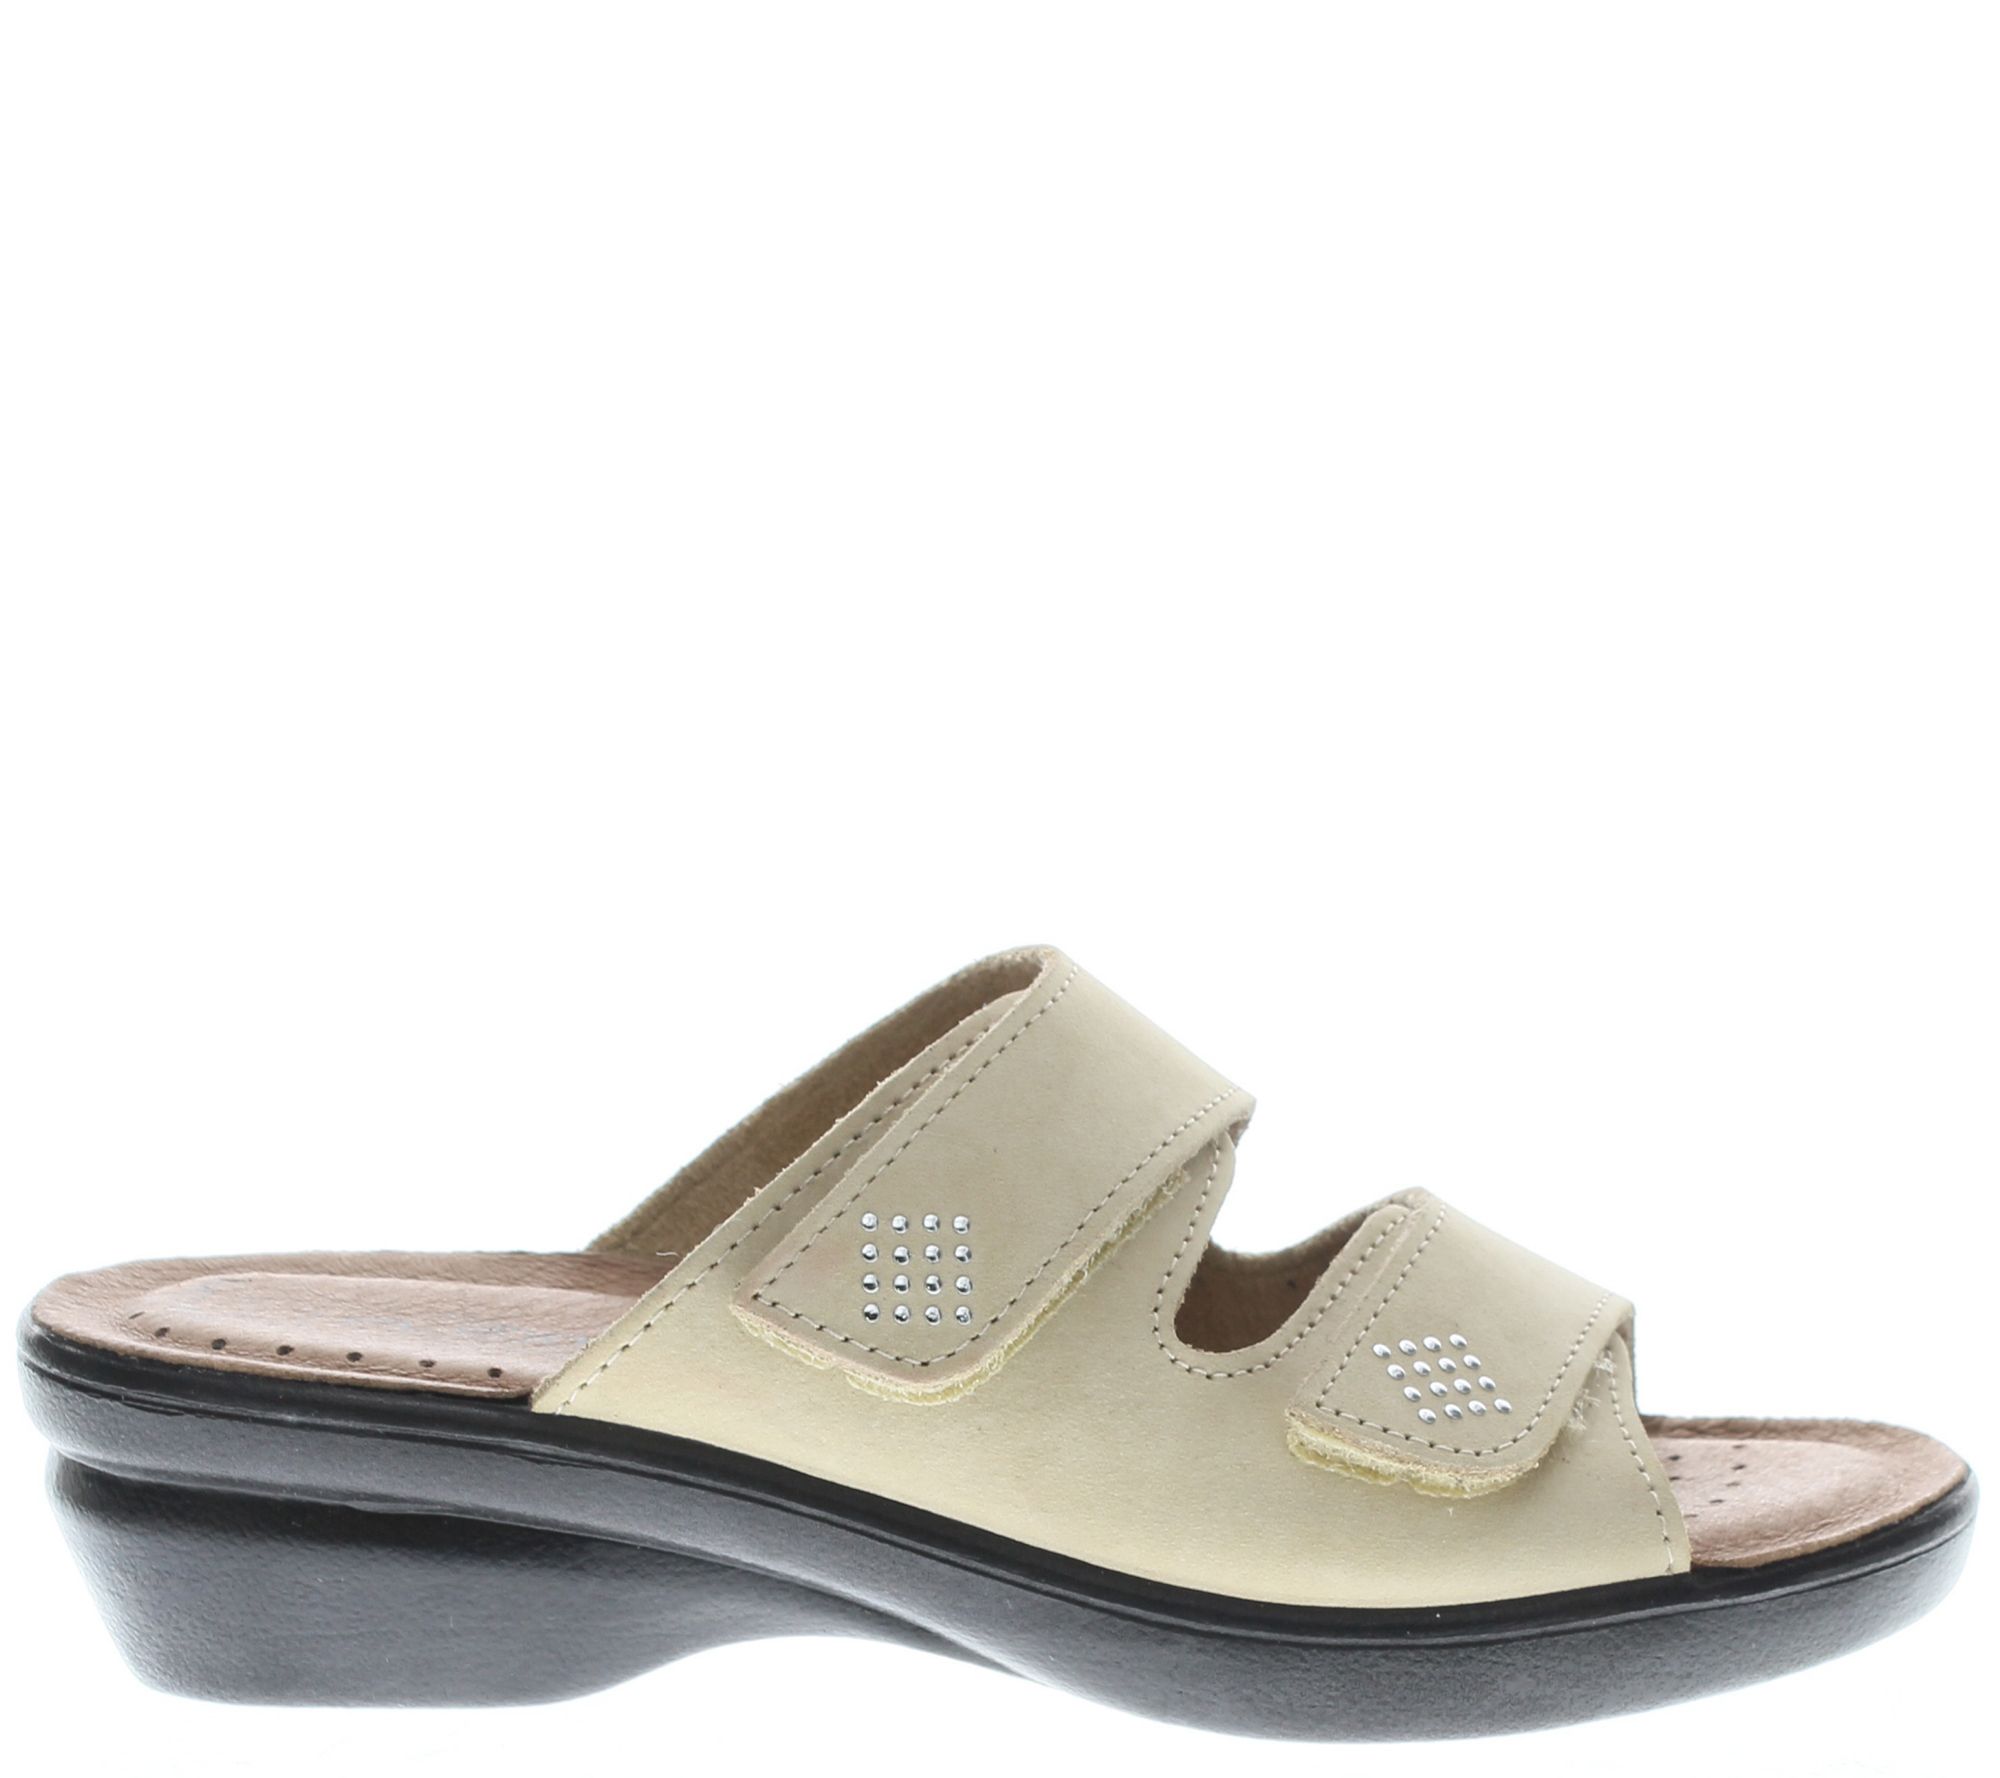 Flexus by Spring Step Leather Slide Sandals - Aditi - QVC.com